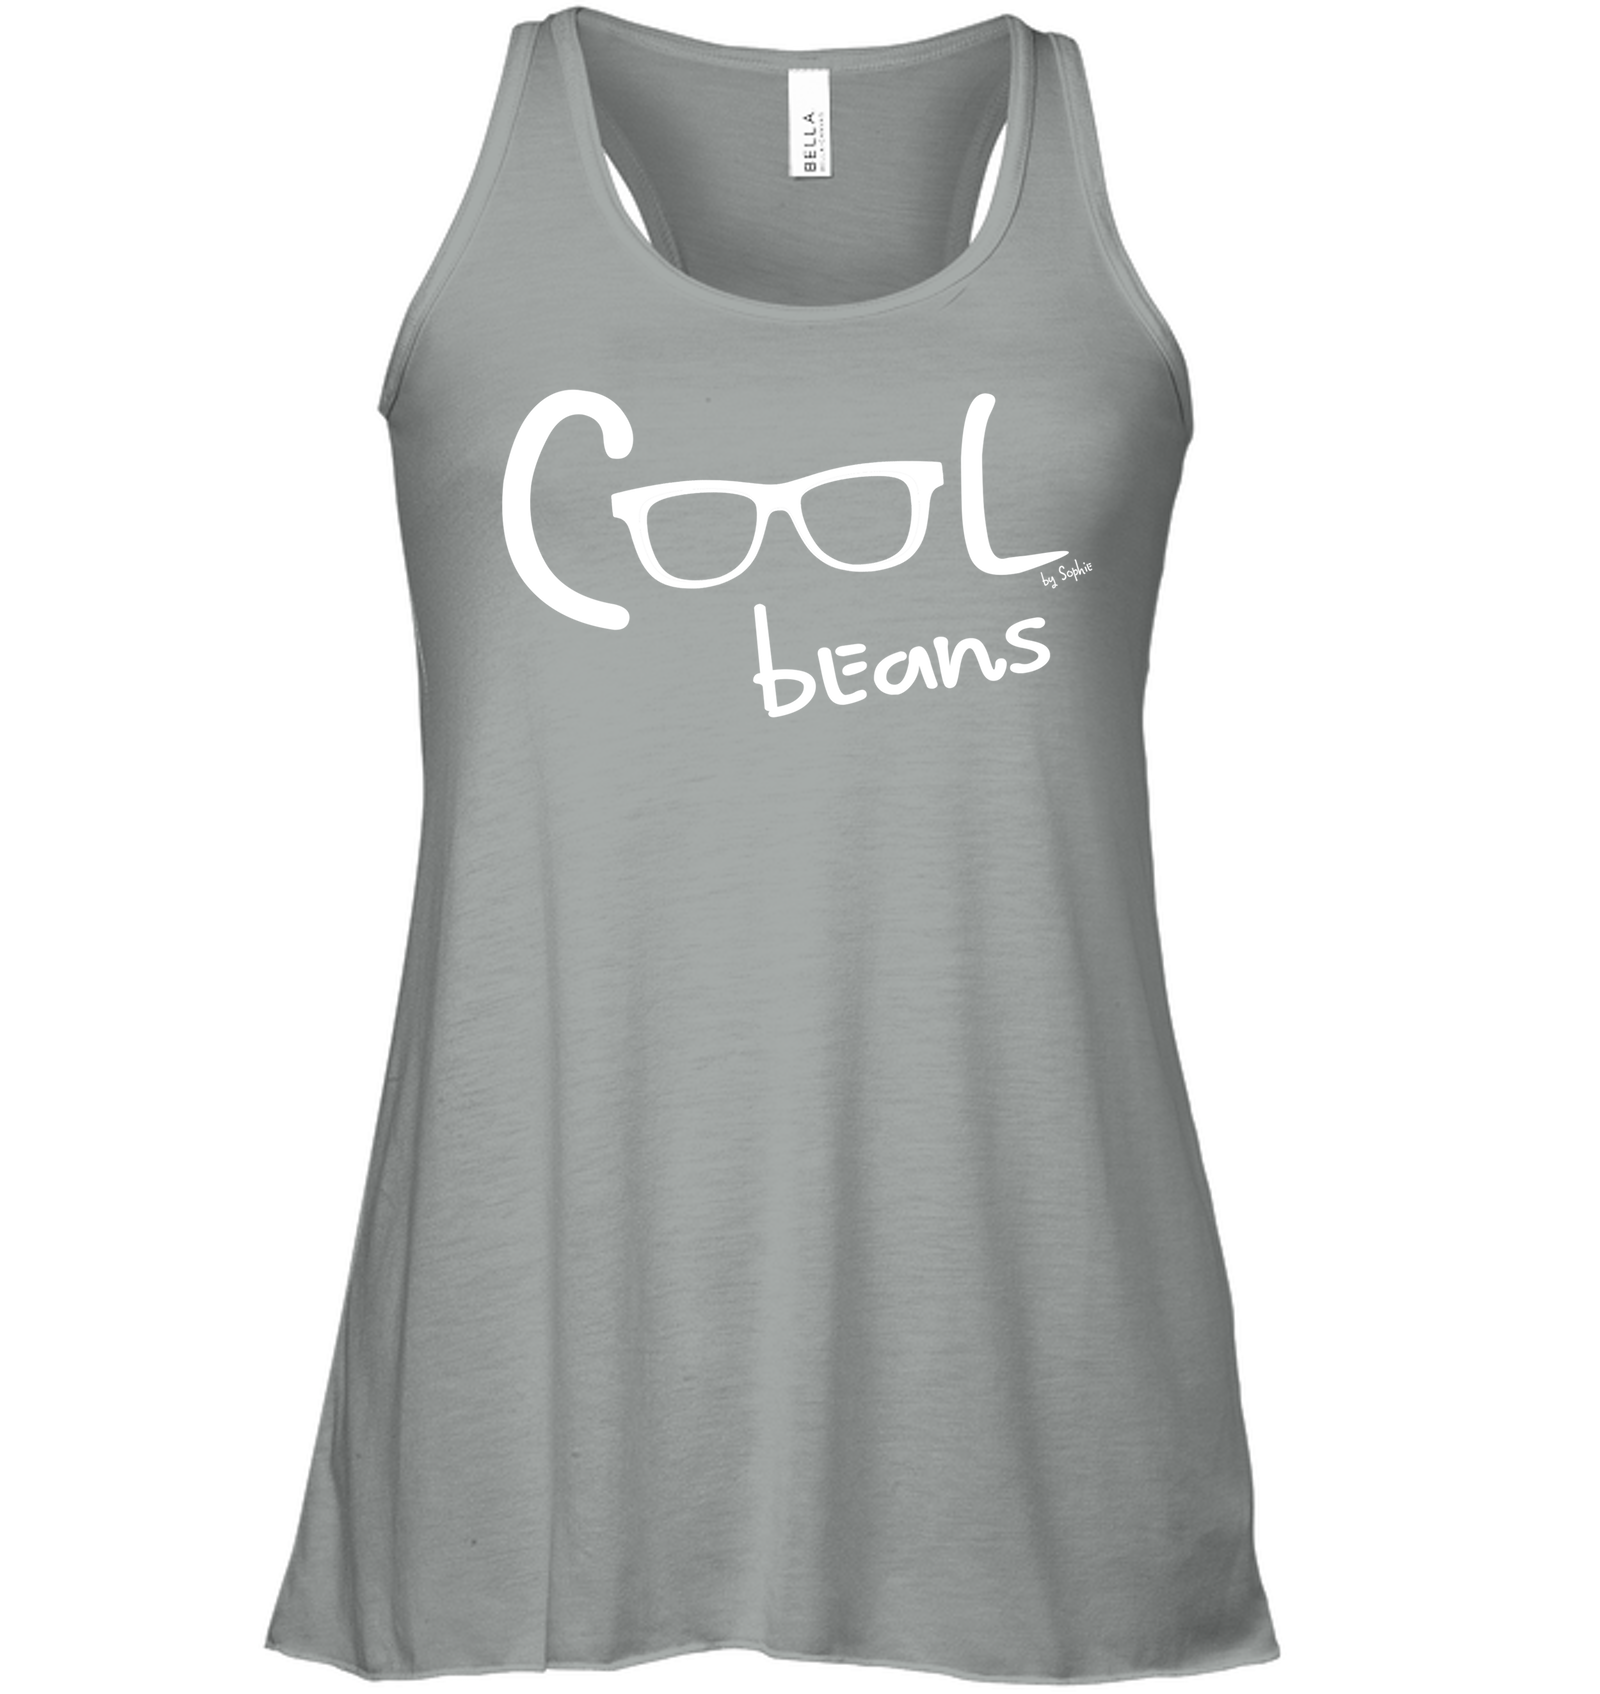 Cool Beans - White - Bella + Canvas Women's Flowy Racerback Tank